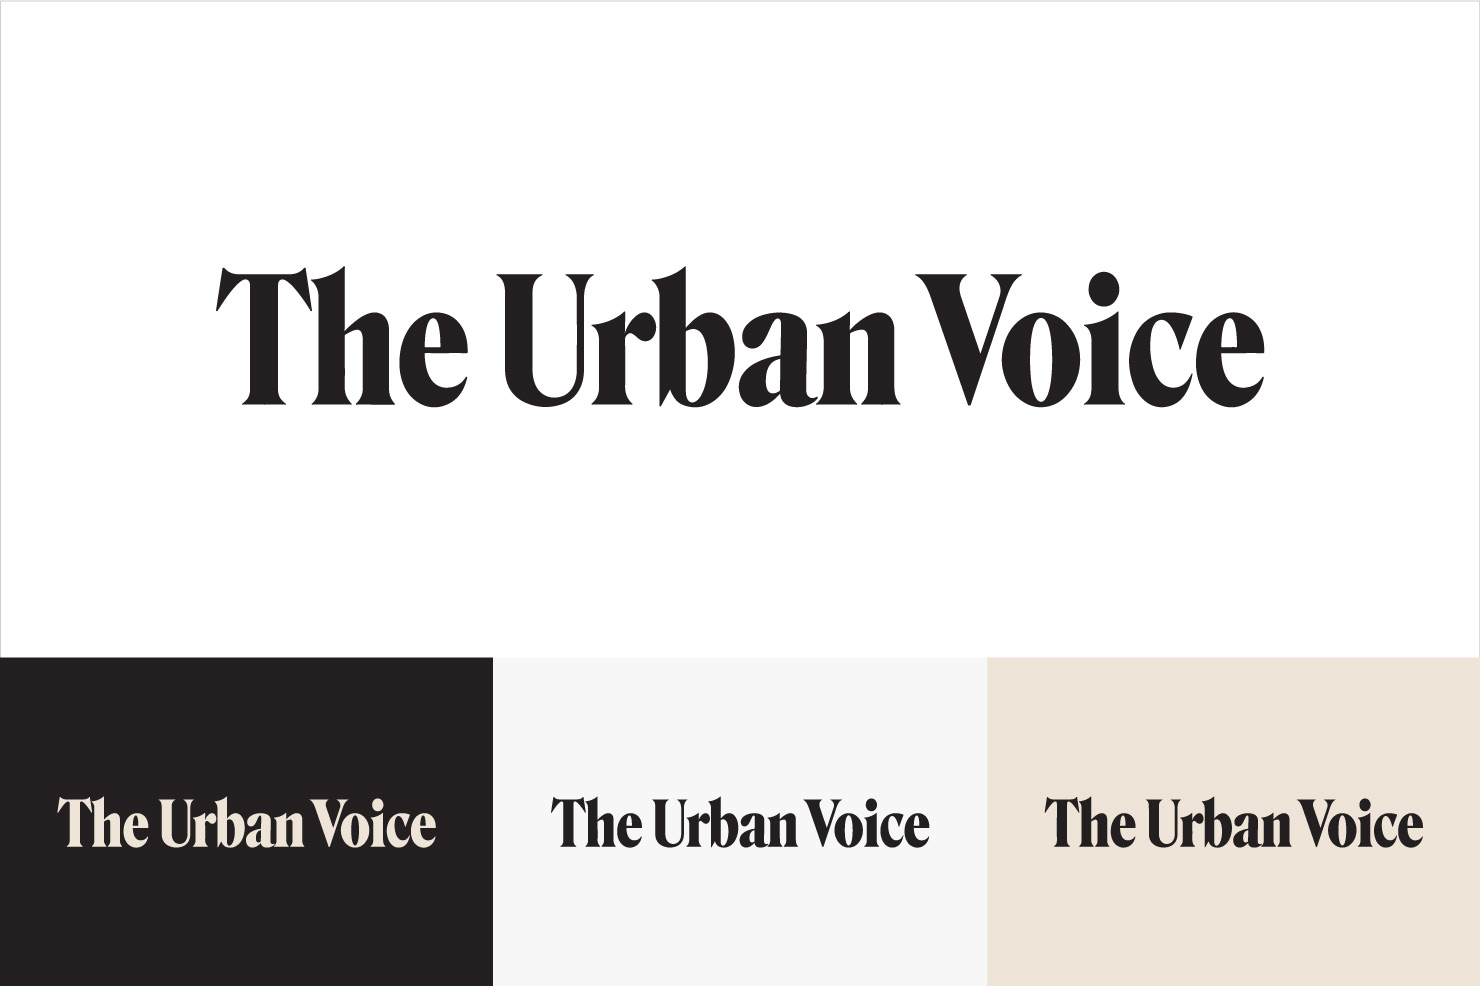 The Urban Voice logo variations